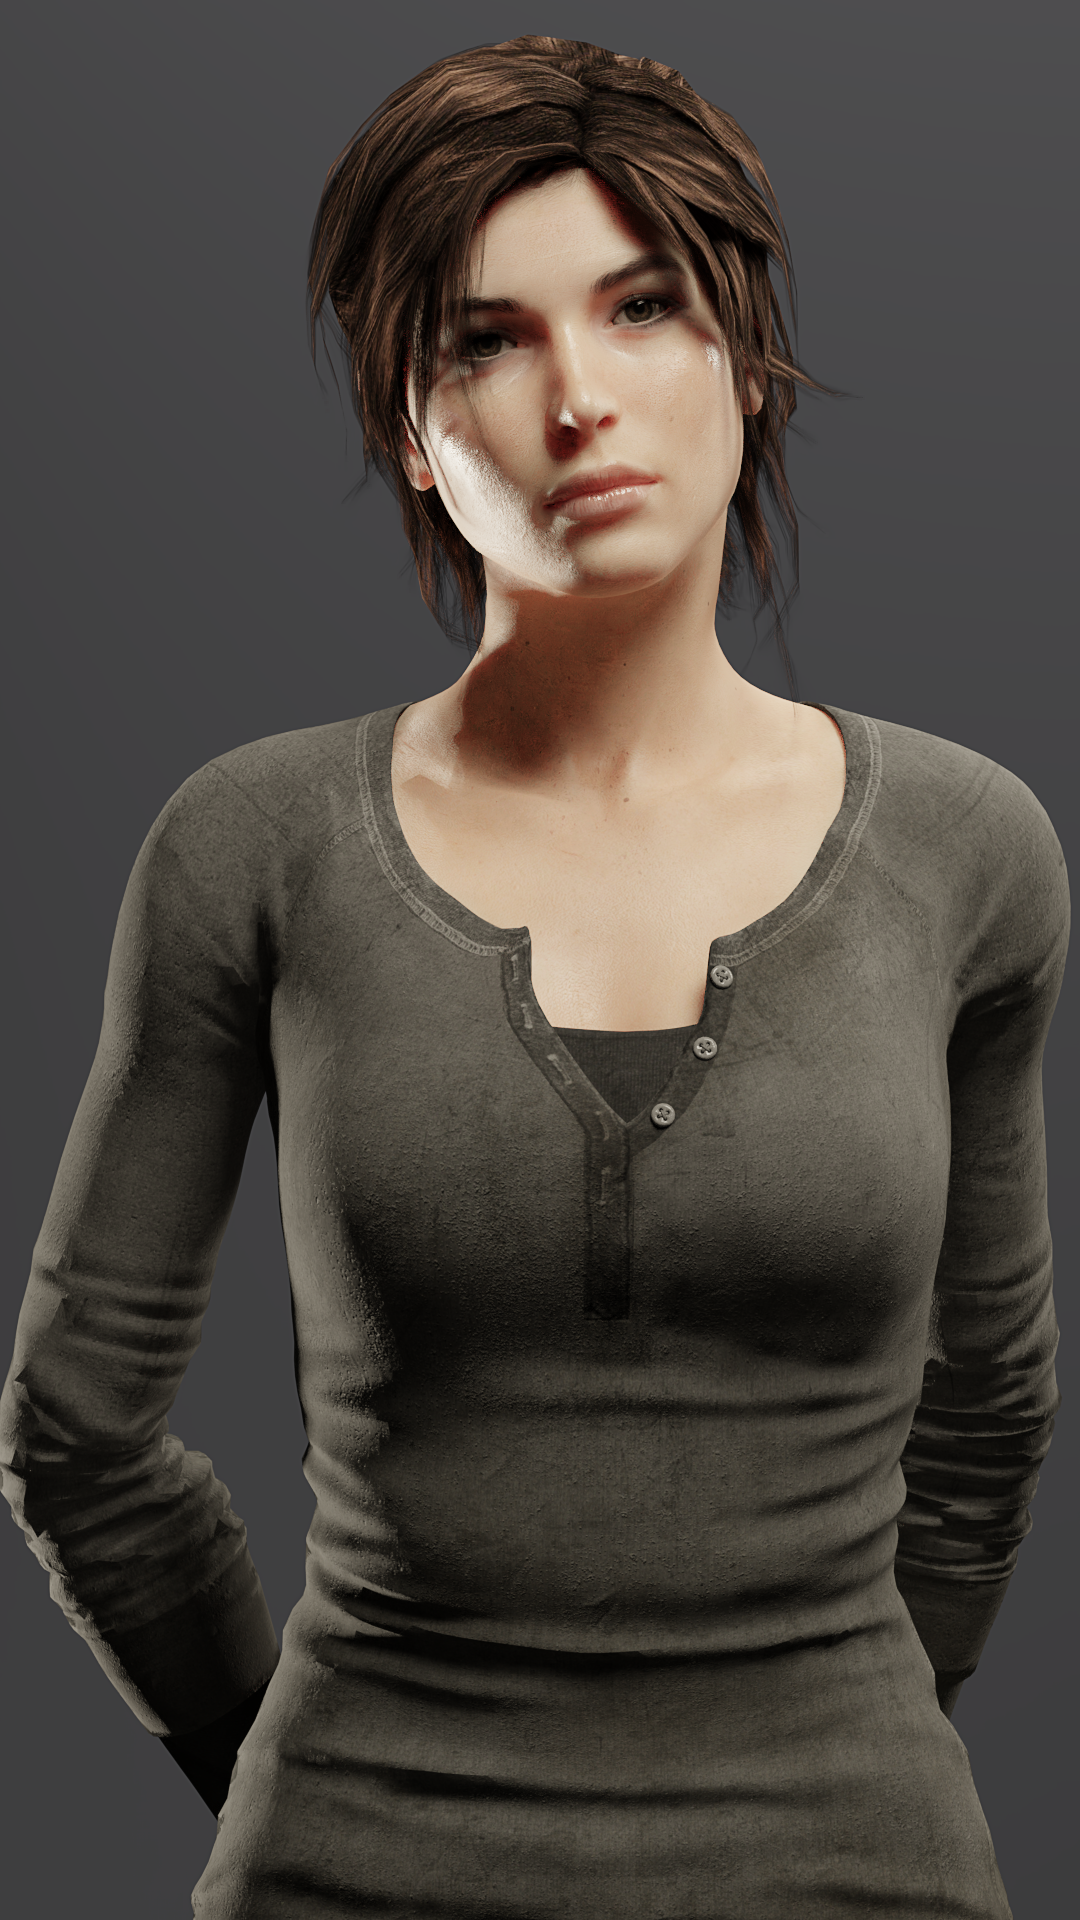 Lara Croft - Stares into your soul